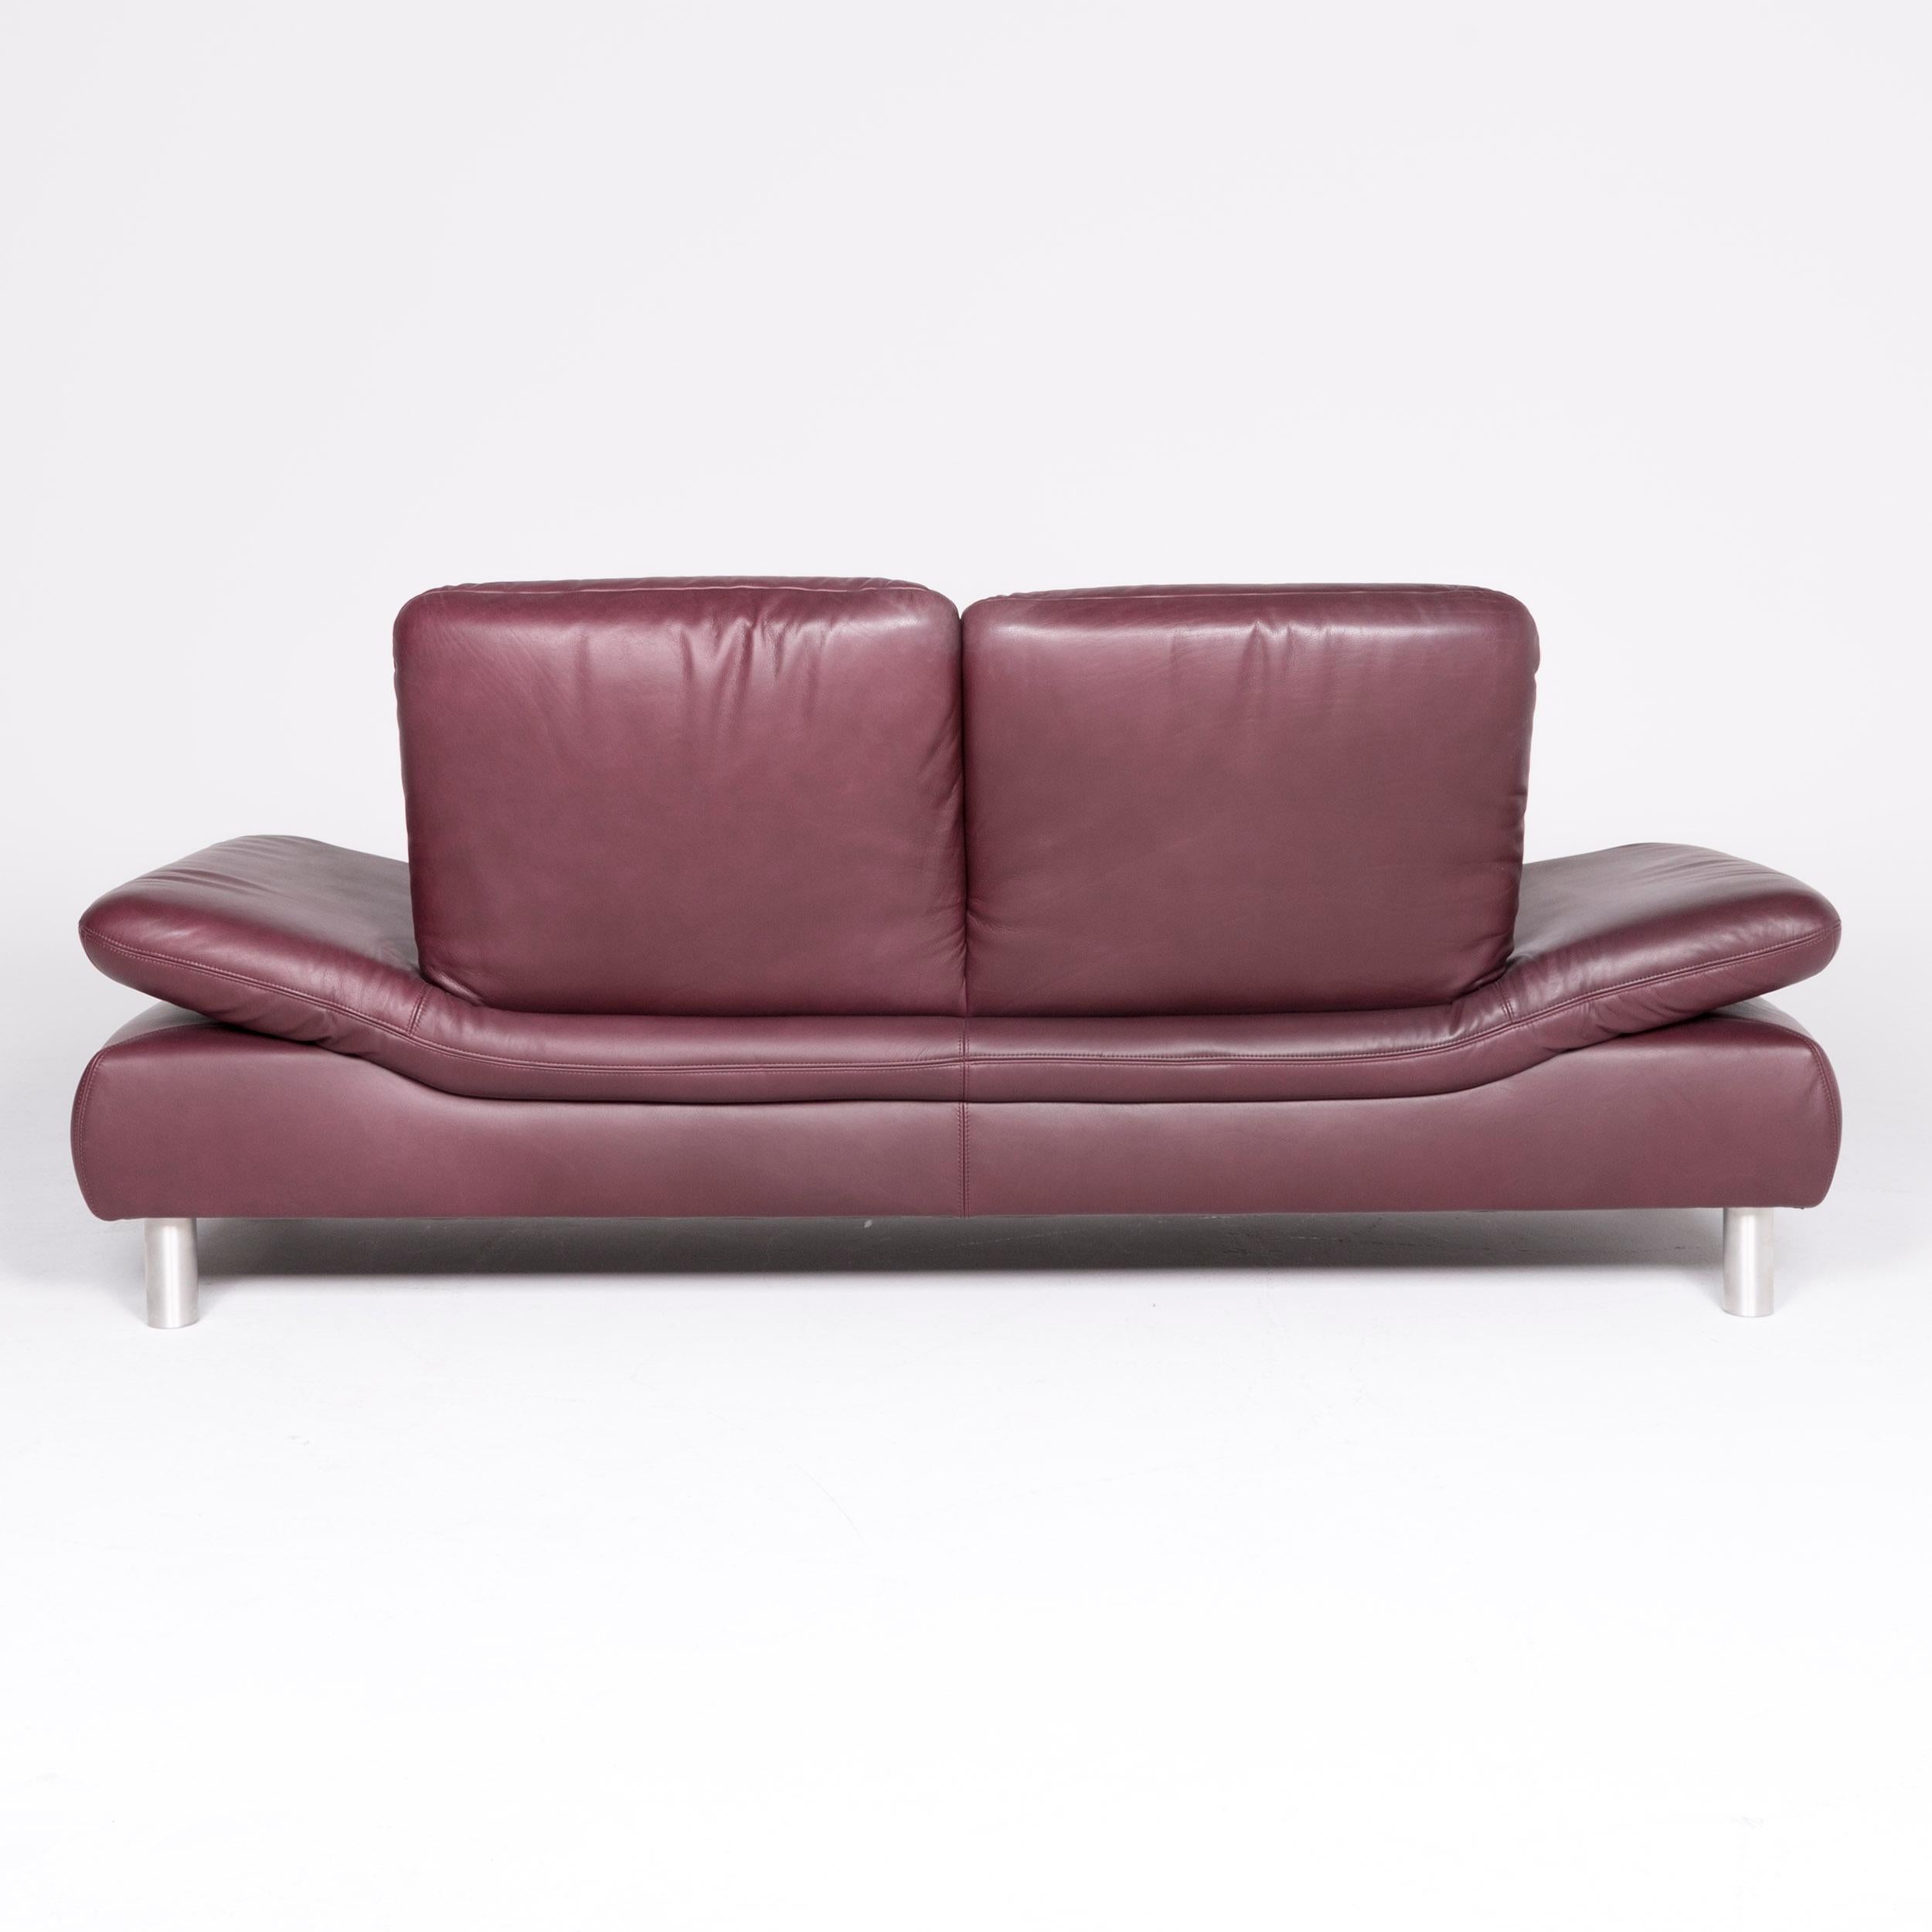 Koinor Rivoli Designer Leather Sofa Purple Genuine Leather Two-Seat Couch For Sale 4